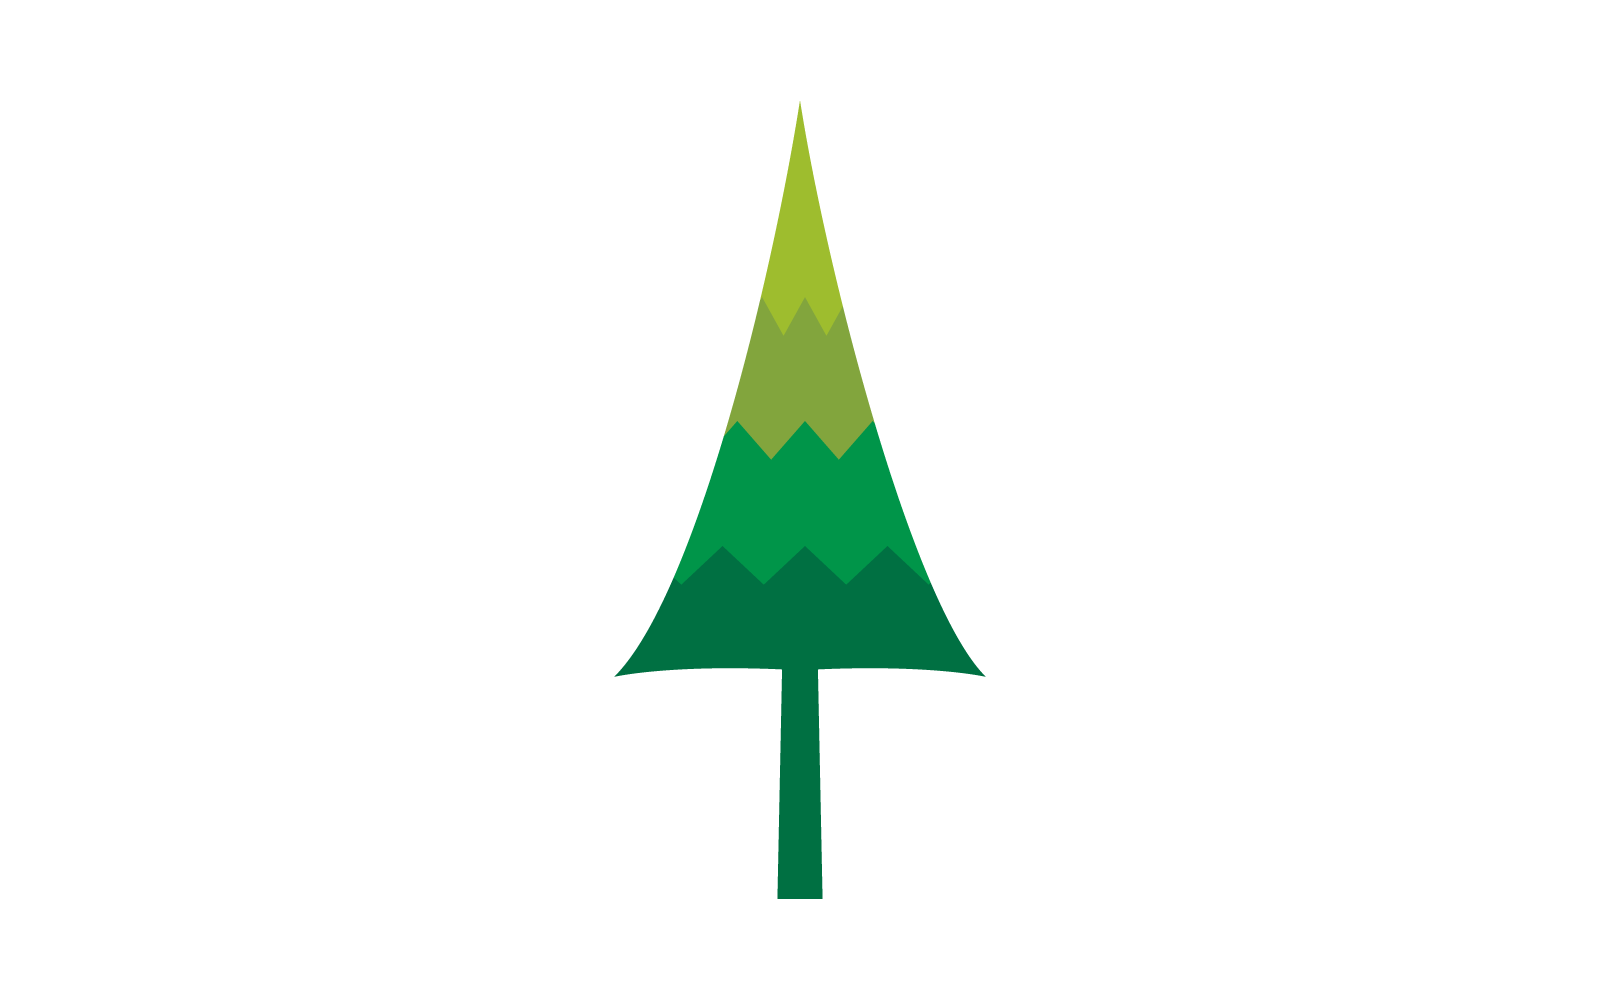 Pine tree illustration vector icon flat design template